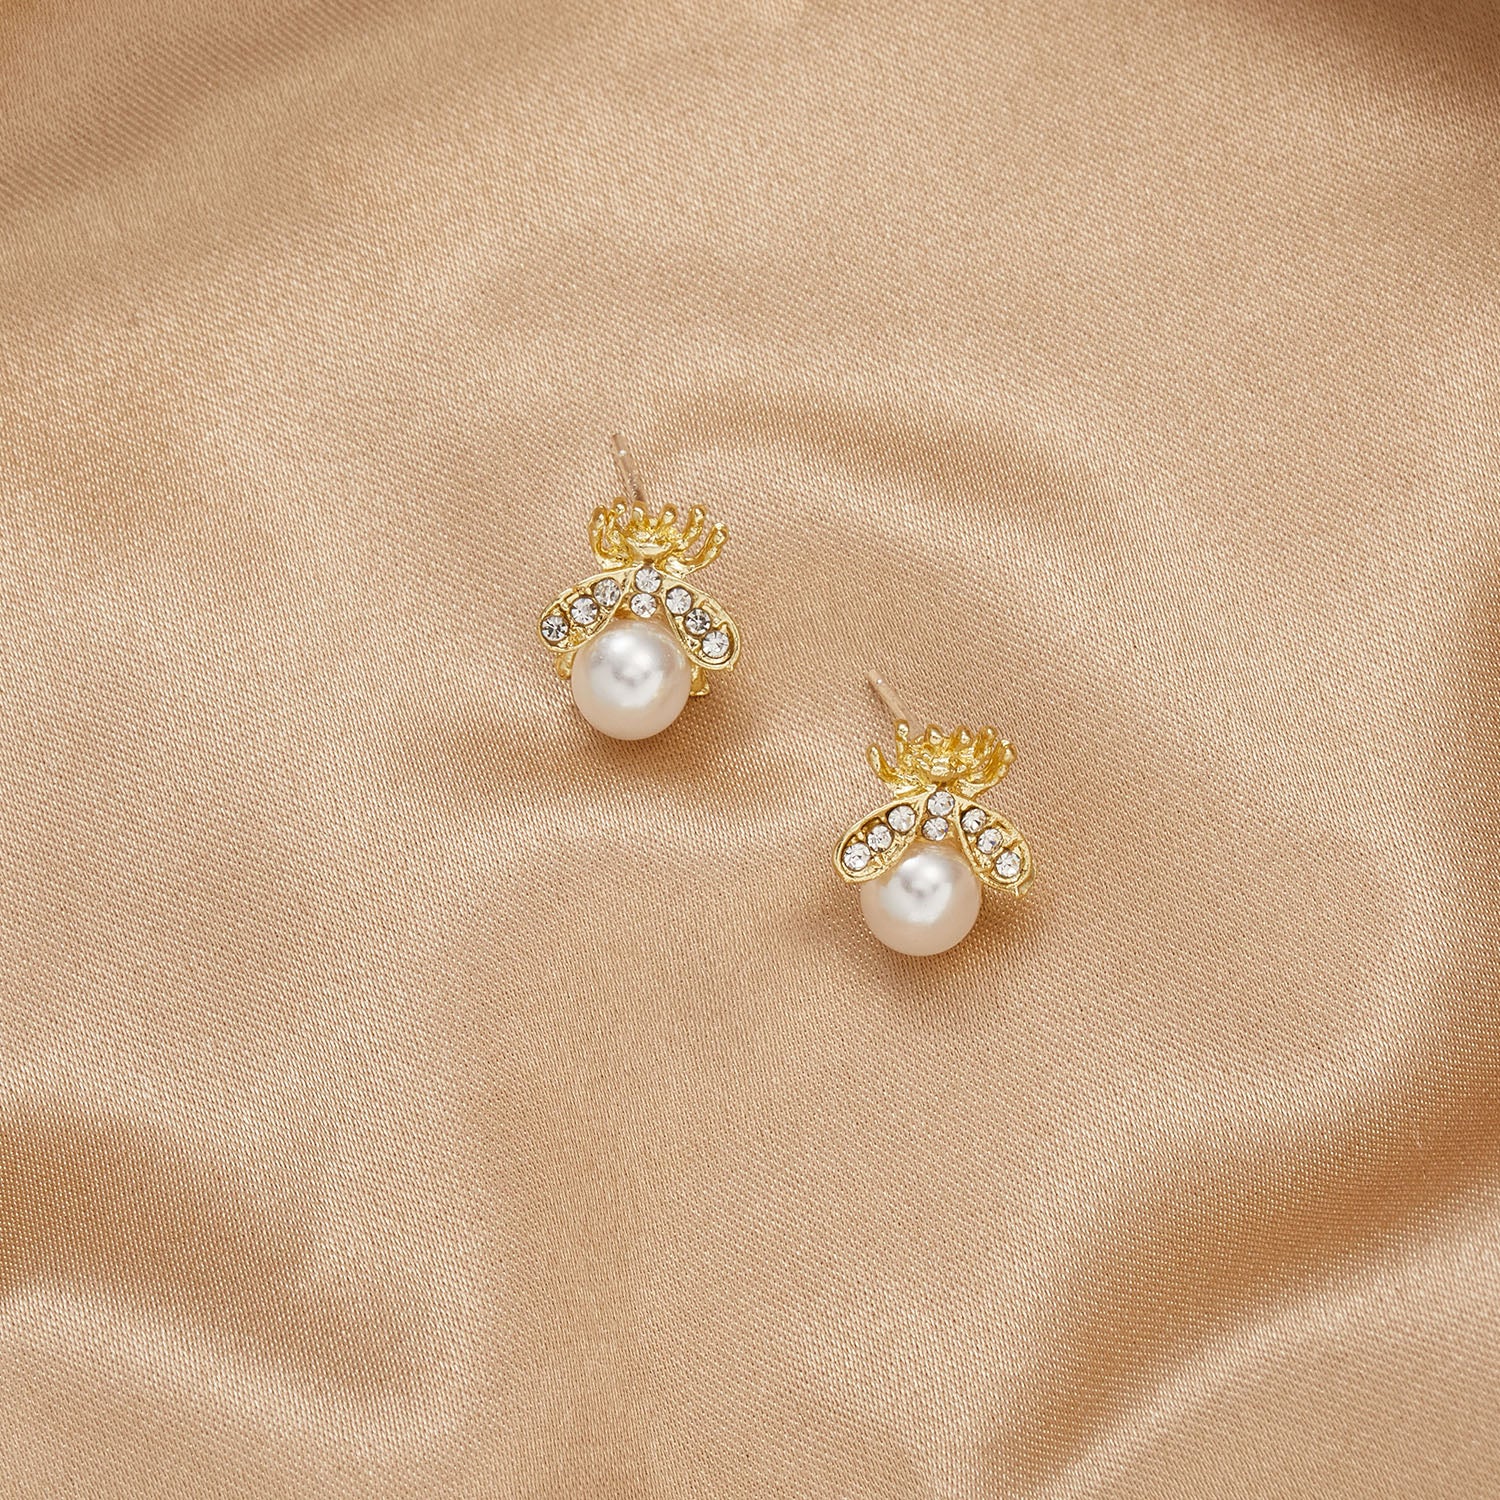 TEEK - Variety Honeybee and Other Pearl Earrings JEWELRY theteekdotcom   